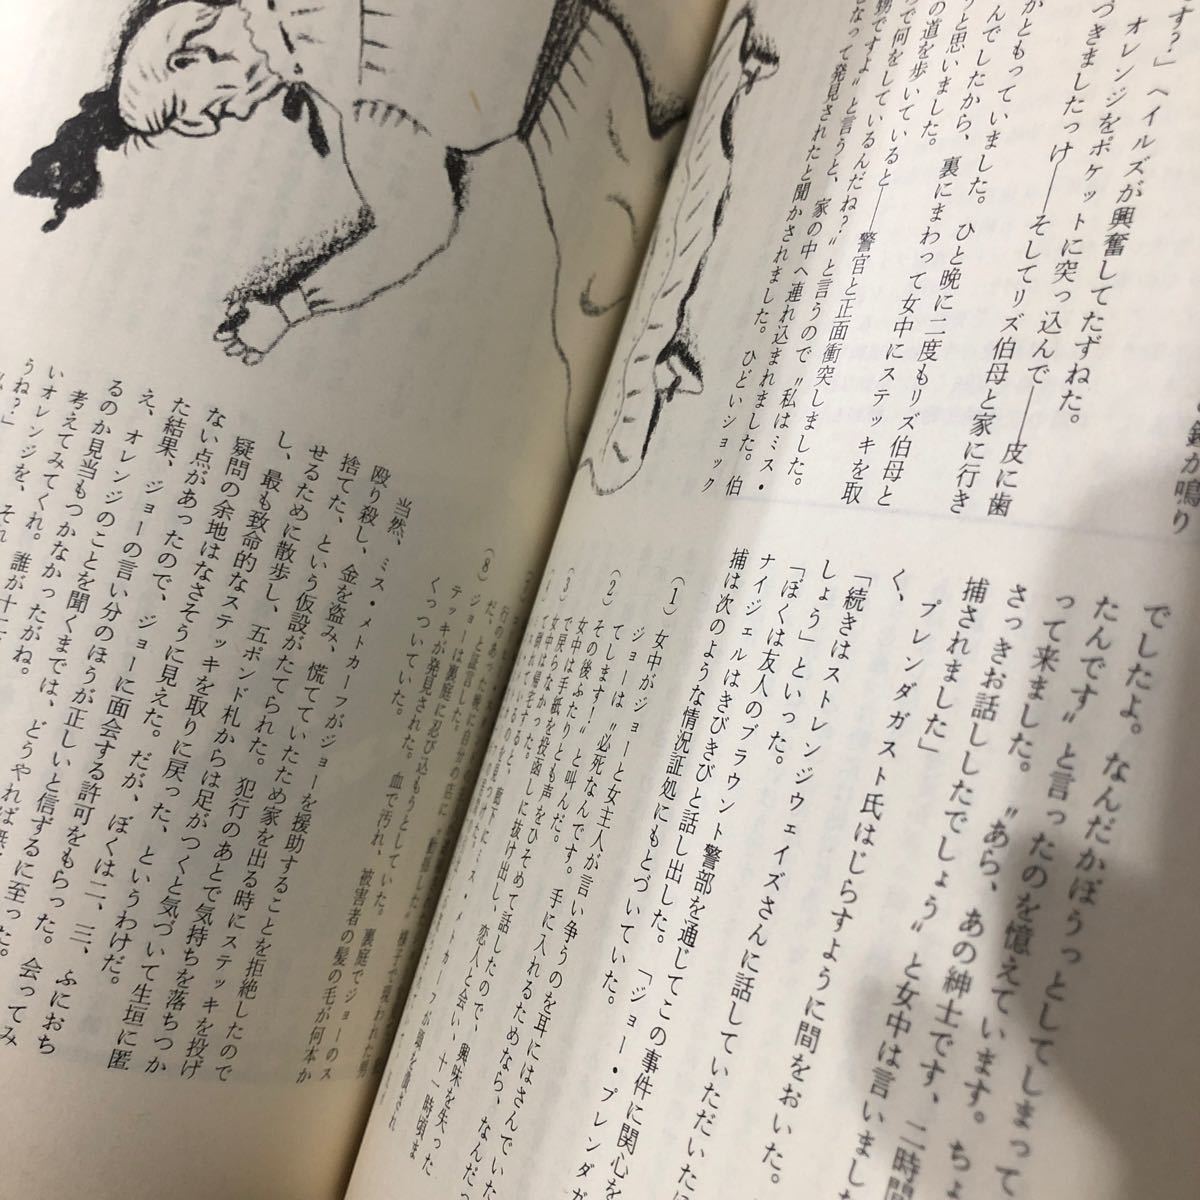 ne87 mistake teli magazine 1980 year 4 month number . river bookstore Showa era 55 year novel literary art thought history economics essay genuine article language 